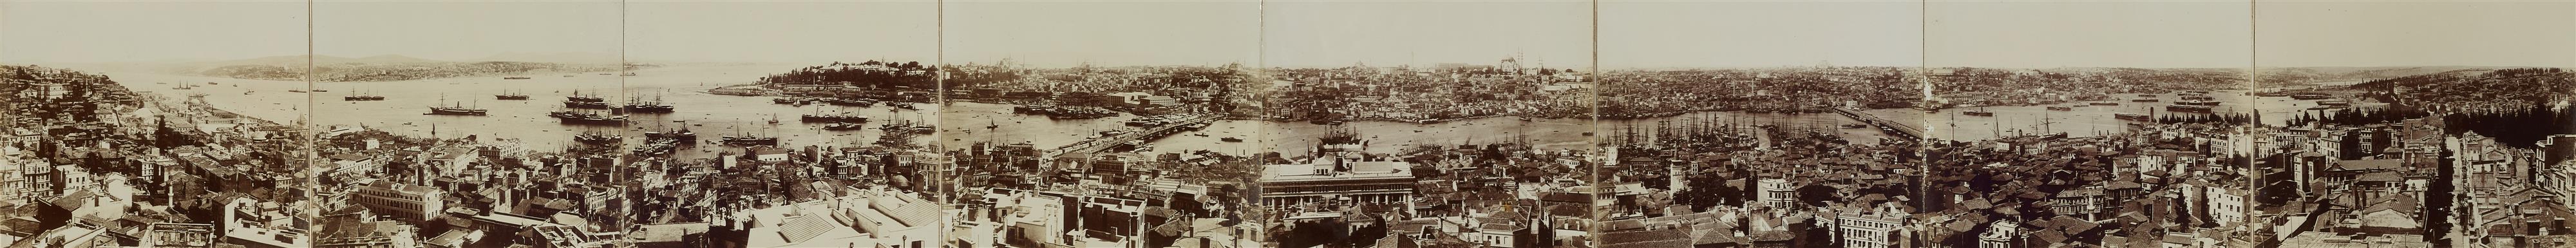 Jean Pascal Sébah - Panorama von Konstantinopel aufgenommen vom Galata-Turm - image-1